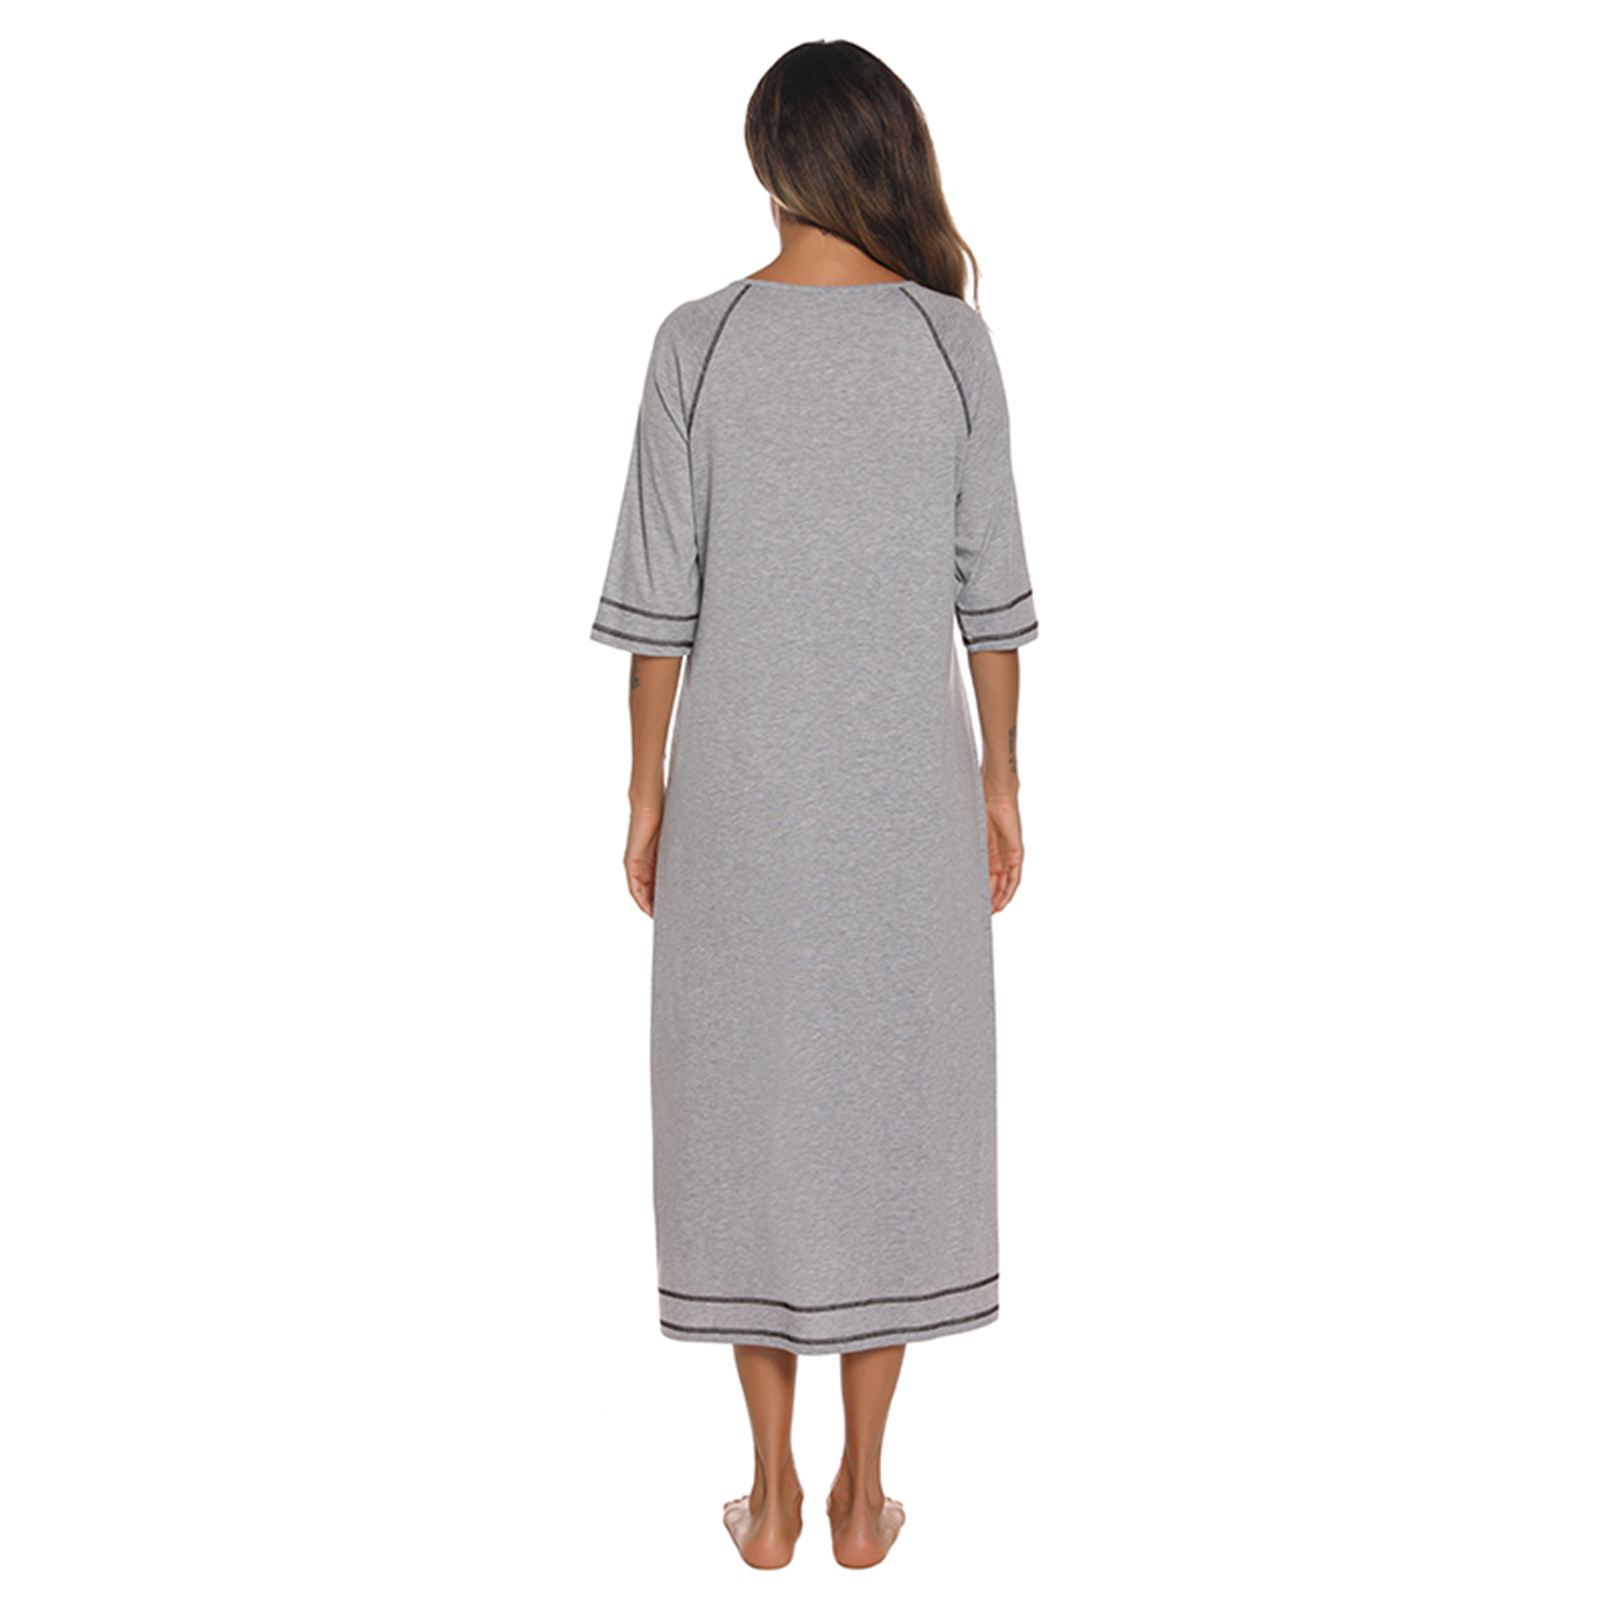 LOFIR Women Zipper Front Robes 3/4 Sleeve Loungewear Pockets Nightgown Loose-Fitting Ladies Long Sleepwear(Light Grey,L) - image 5 of 6